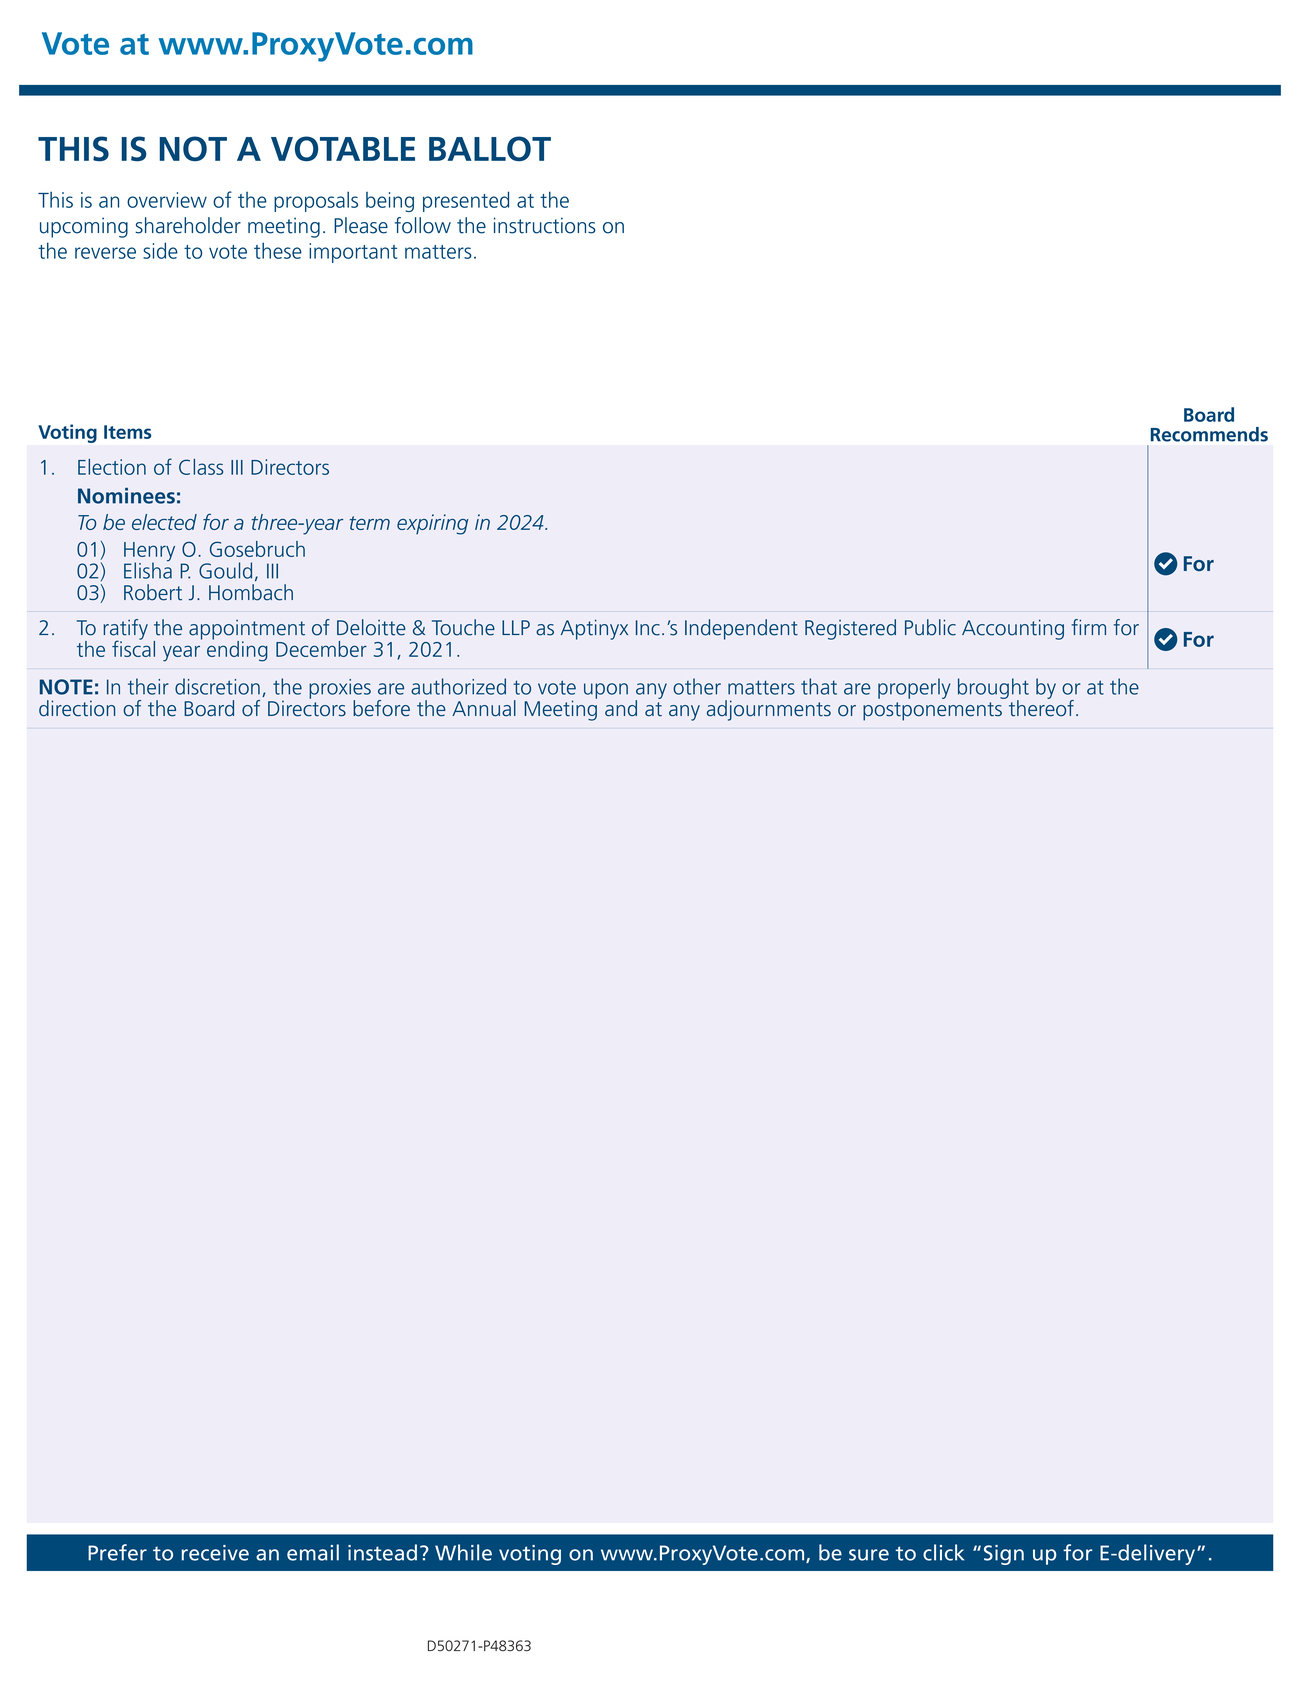 New Microsoft Word Document_aptinyx inc vsmv n&a ppage48363 ppage48278page021(page53206) pcpage002_page002.jpg